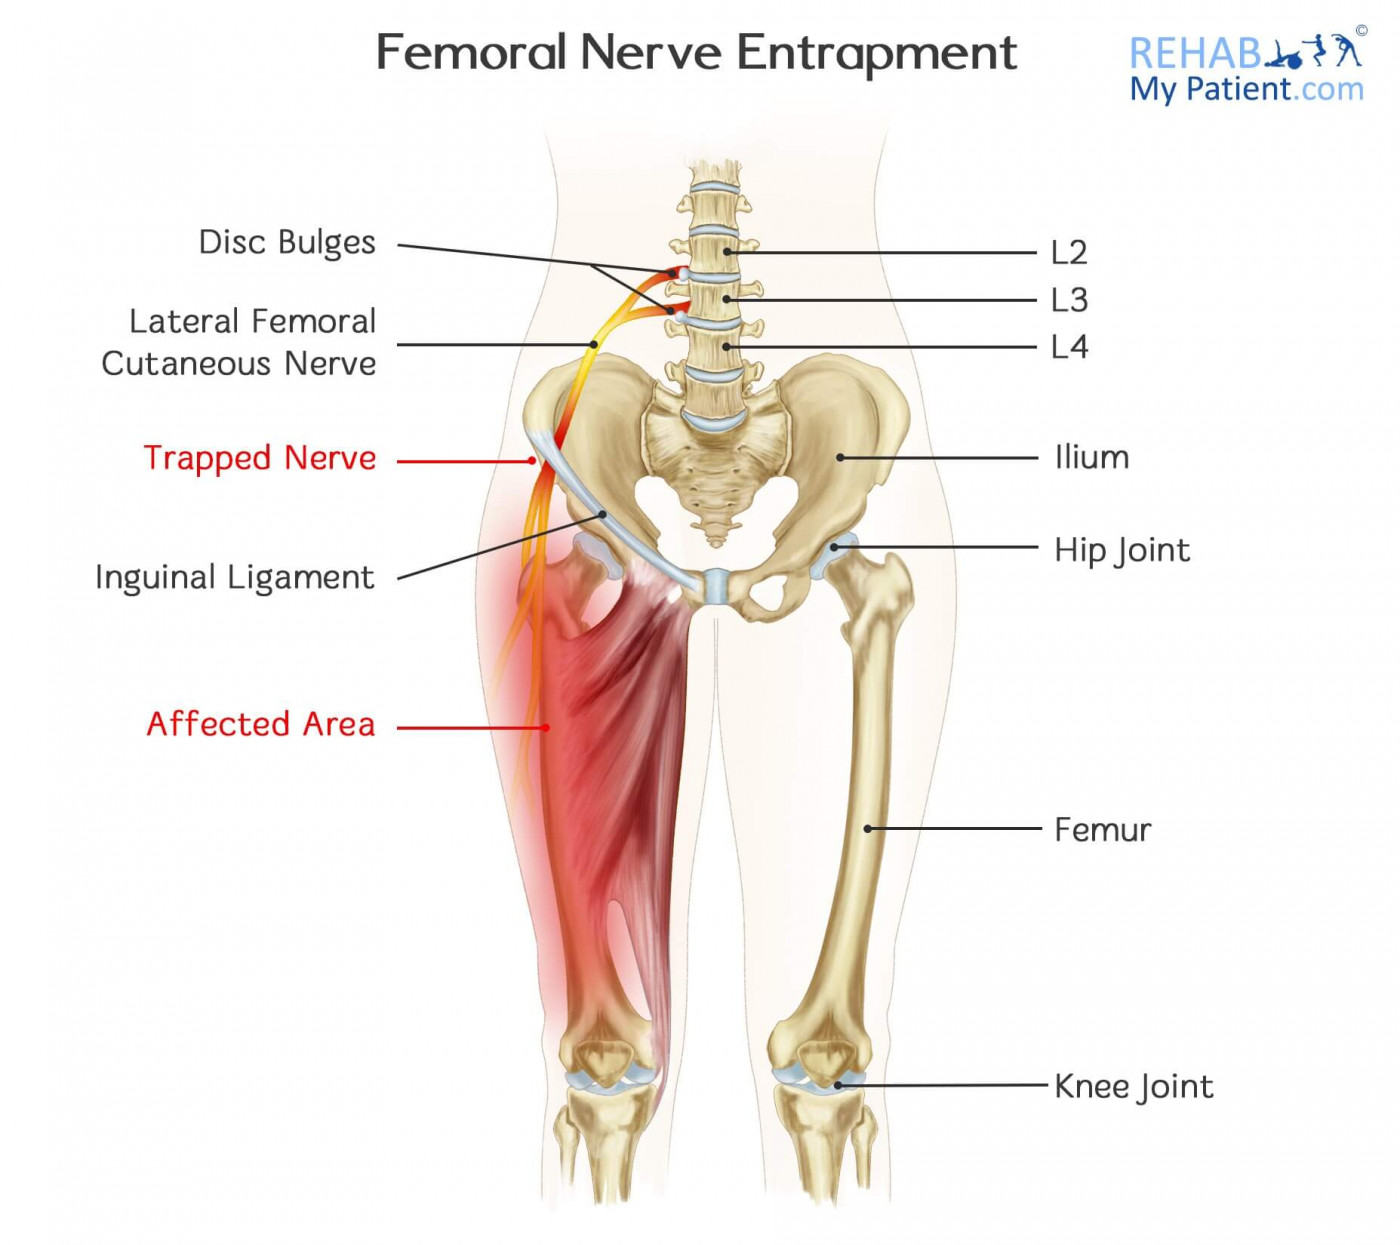 Femoral Nerve Entrapment | Rehab My Patient